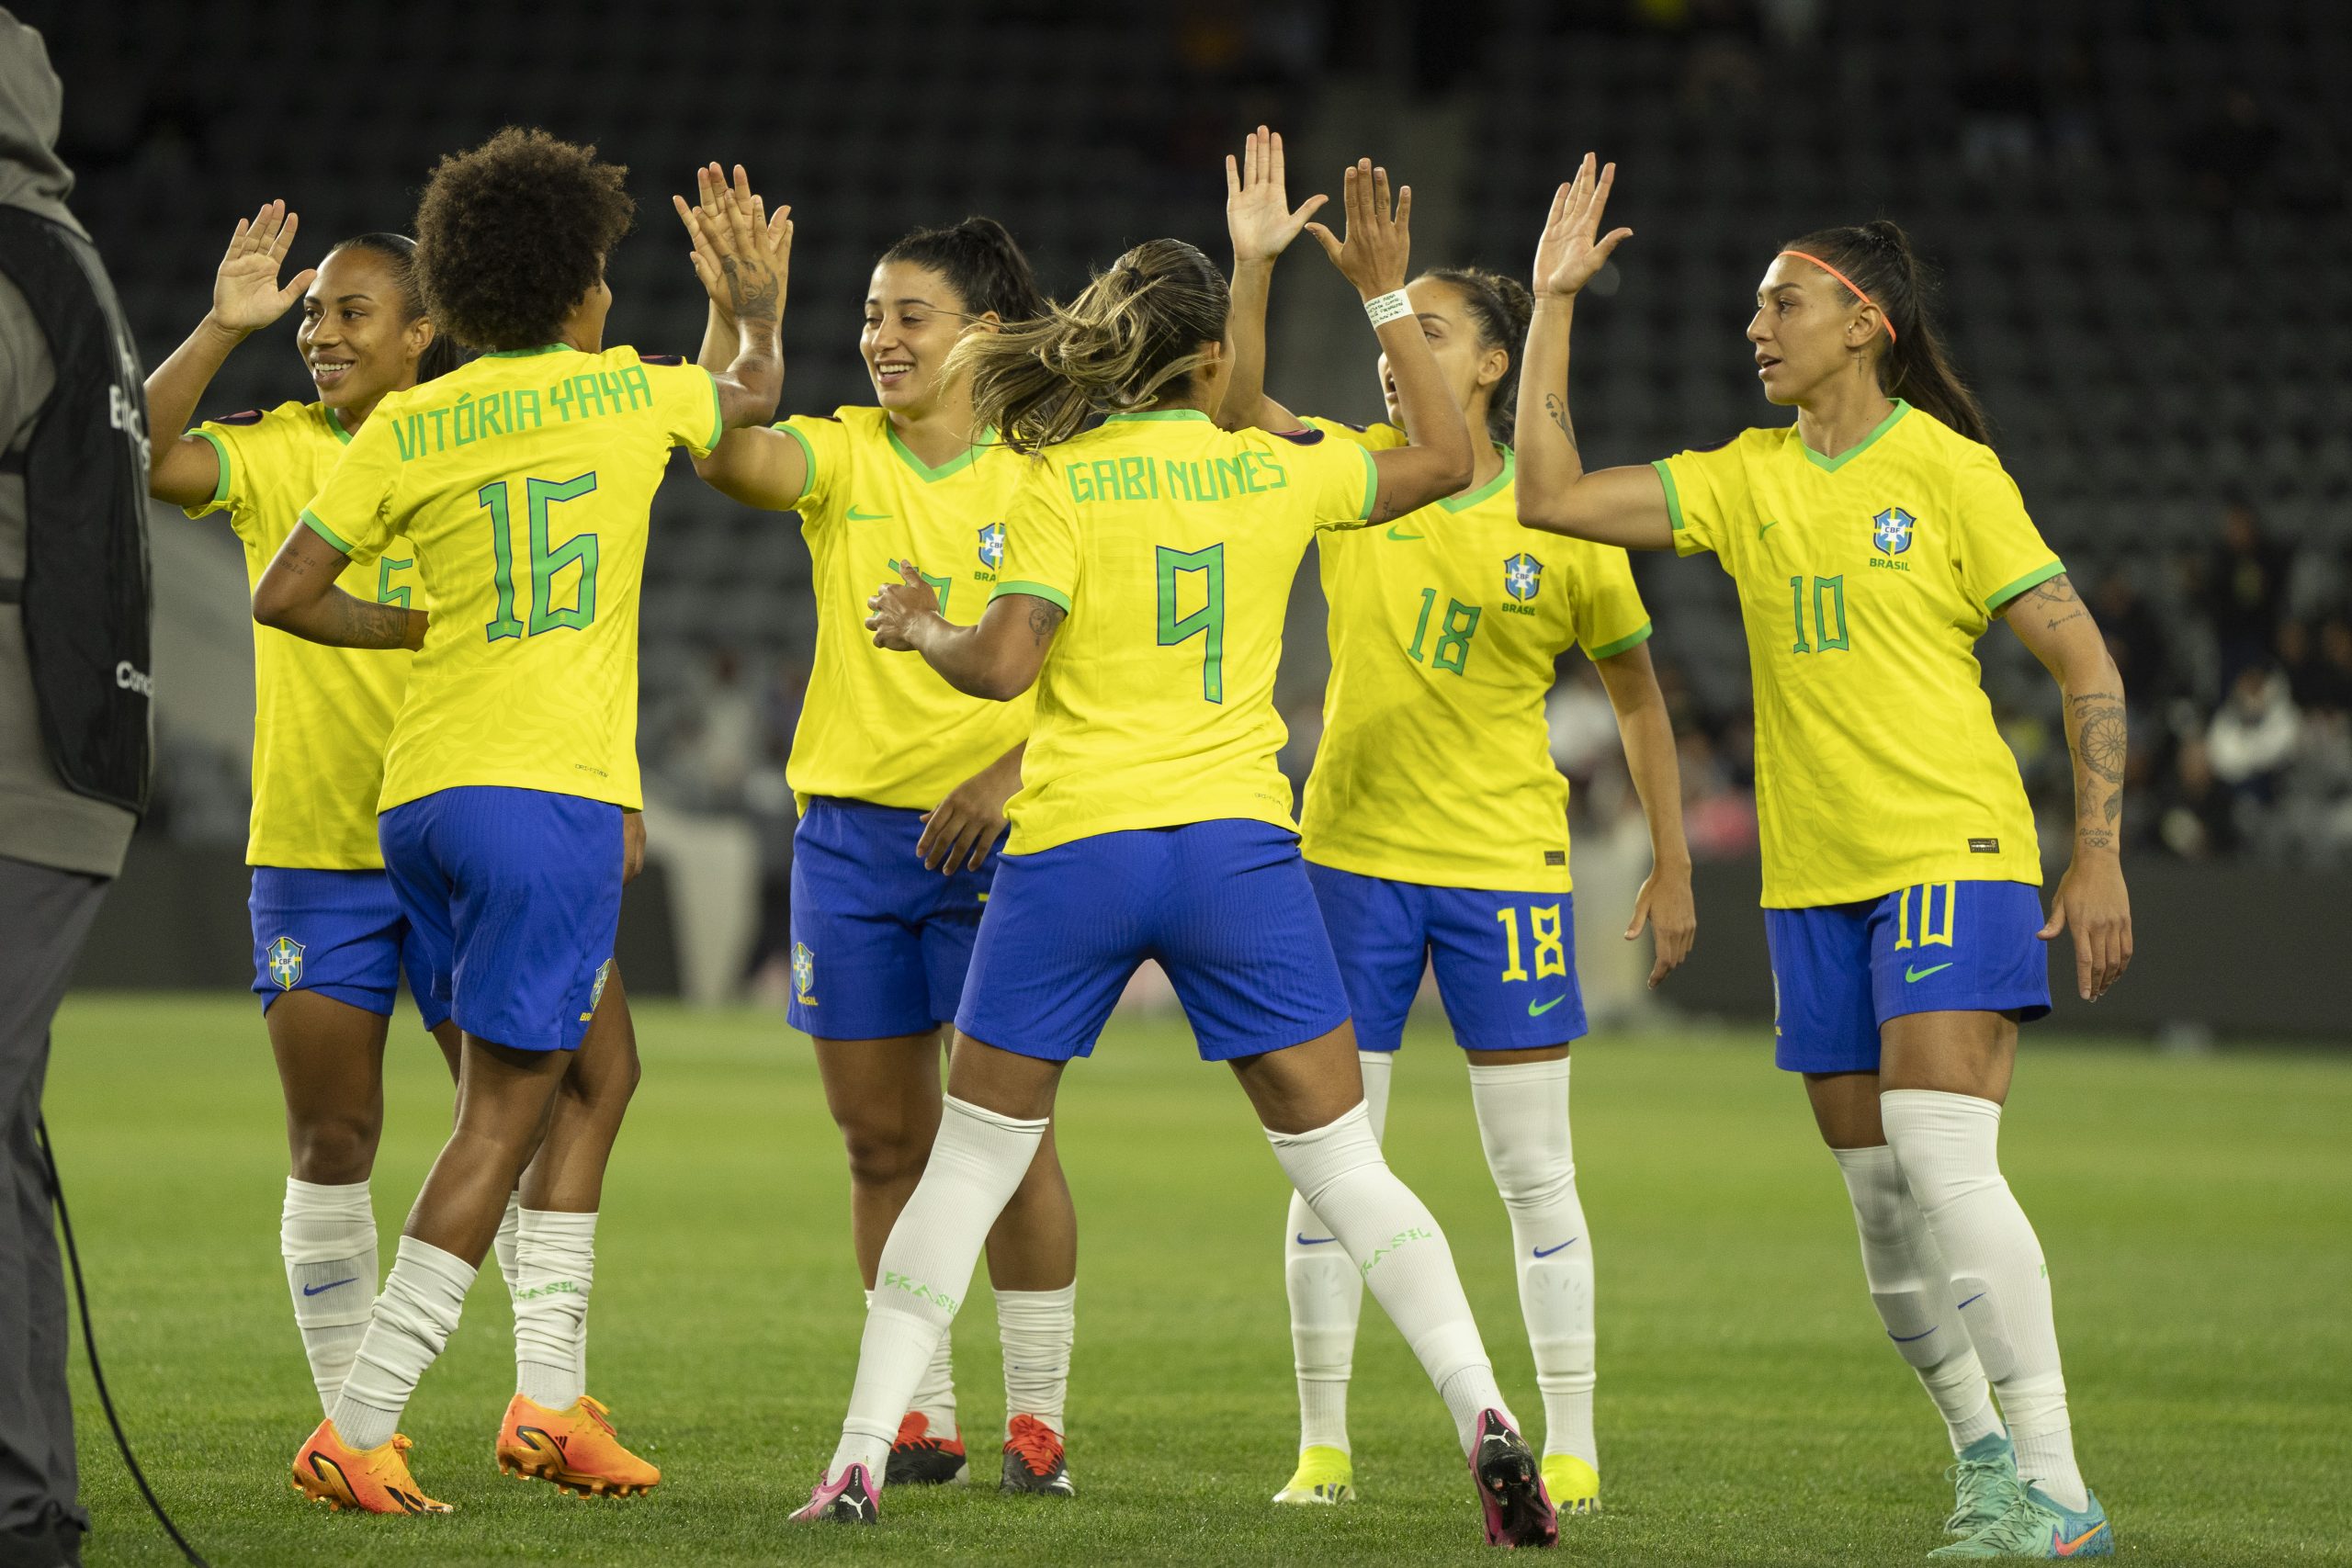 Invicto, Brasil enfrenta México pela semifinal da Copa Ouro Feminina (Foto: Leandro Lopes/CBF)